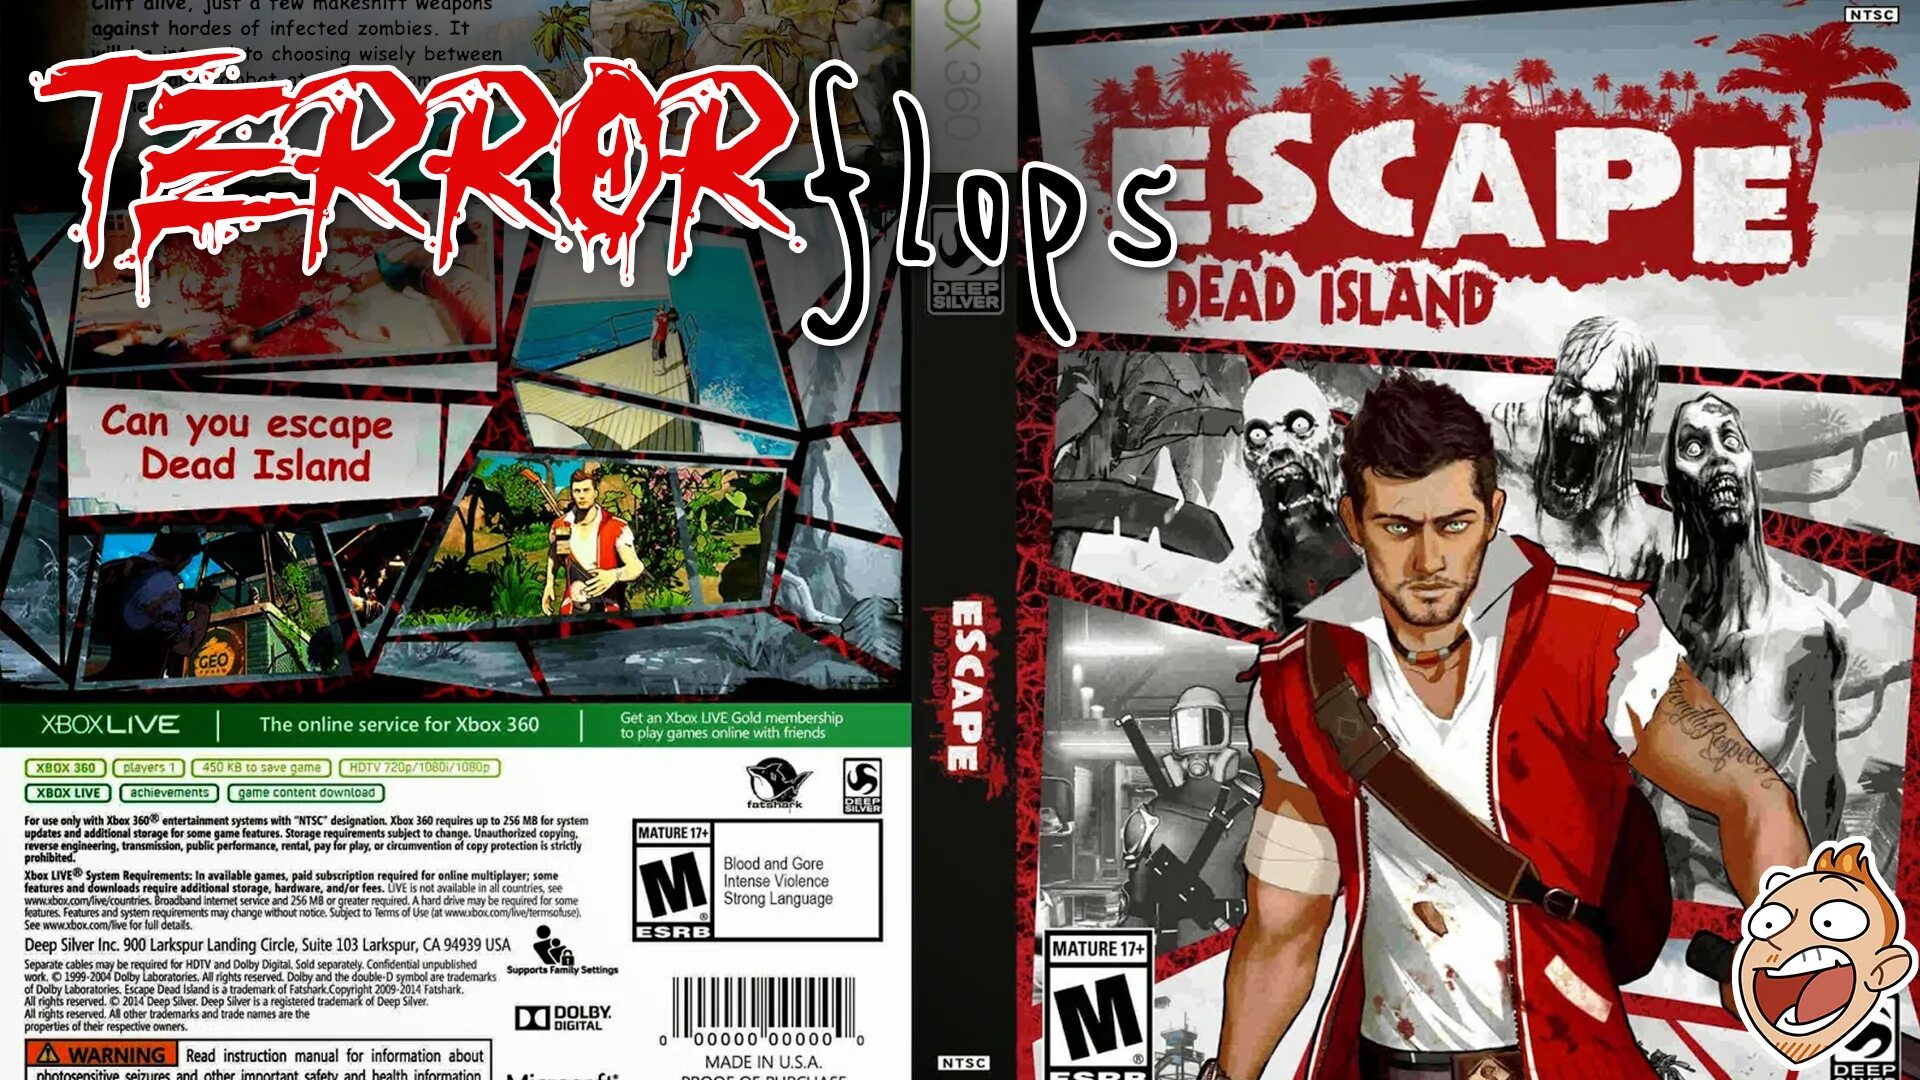 Dead island 360. Деад Исланд на хбокс 360. Escape Dead Island Xbox 360 обложка.